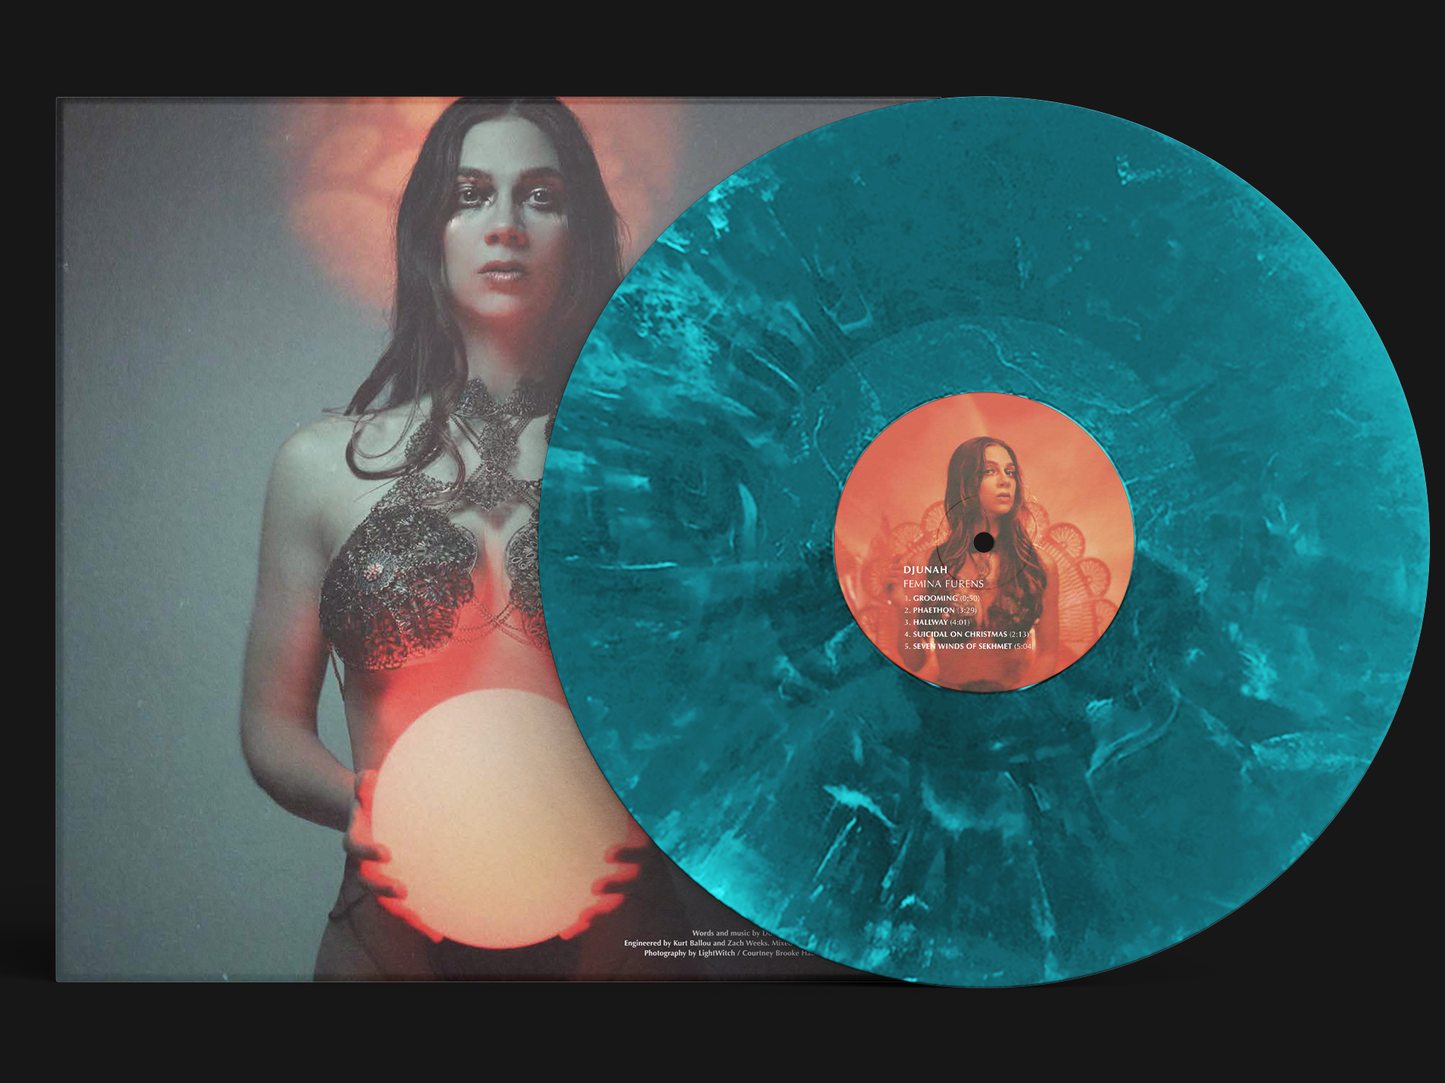 Djunah "Femina Furens" second pressing 12"  LP on deep ocean swirl vinyl, reverse cover, pressed by Smashed Plastic in Chicago, Illinois